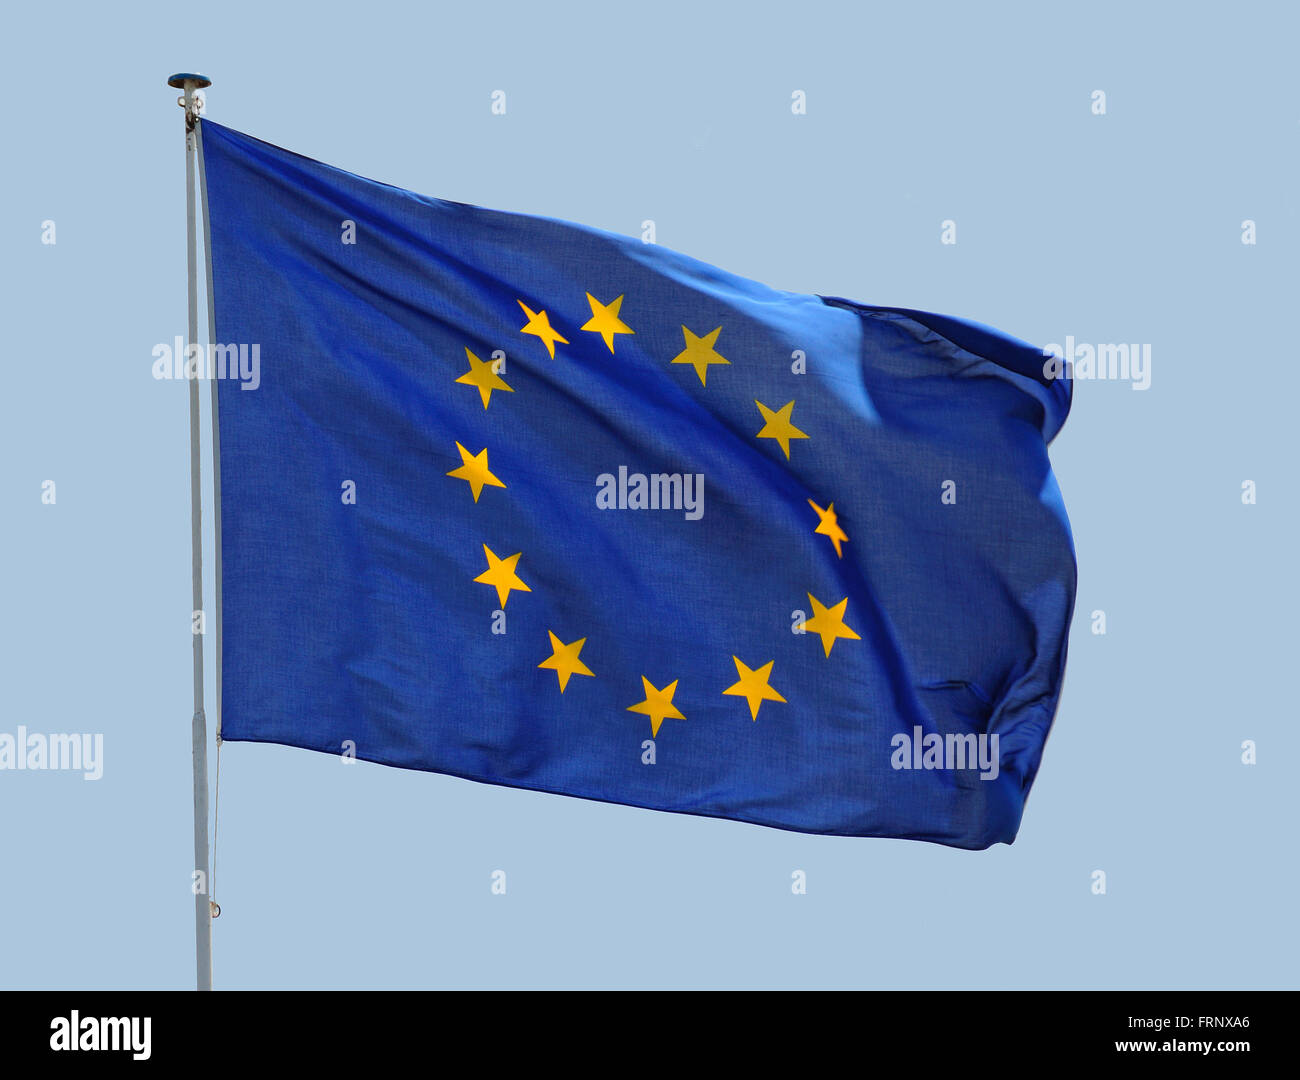 European Union flag fluttering in a brisk breeze against a blue sky. Stock Photo